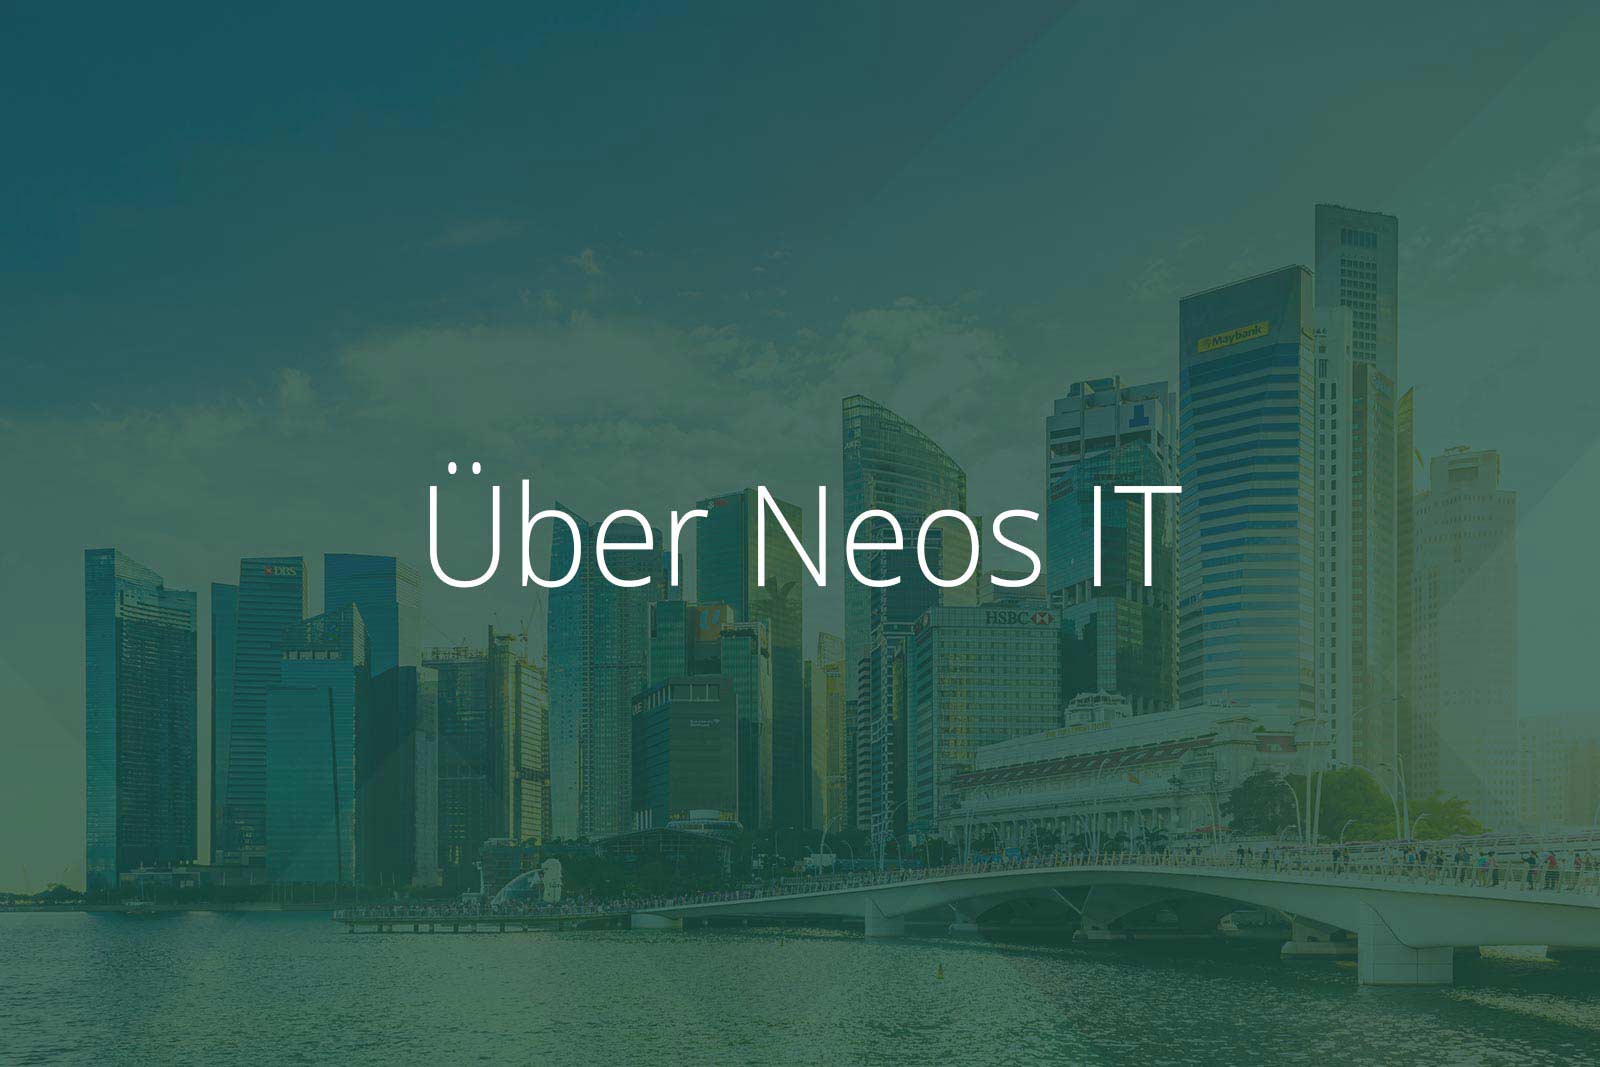 Über Neos IT Services, Abbildung Singapore